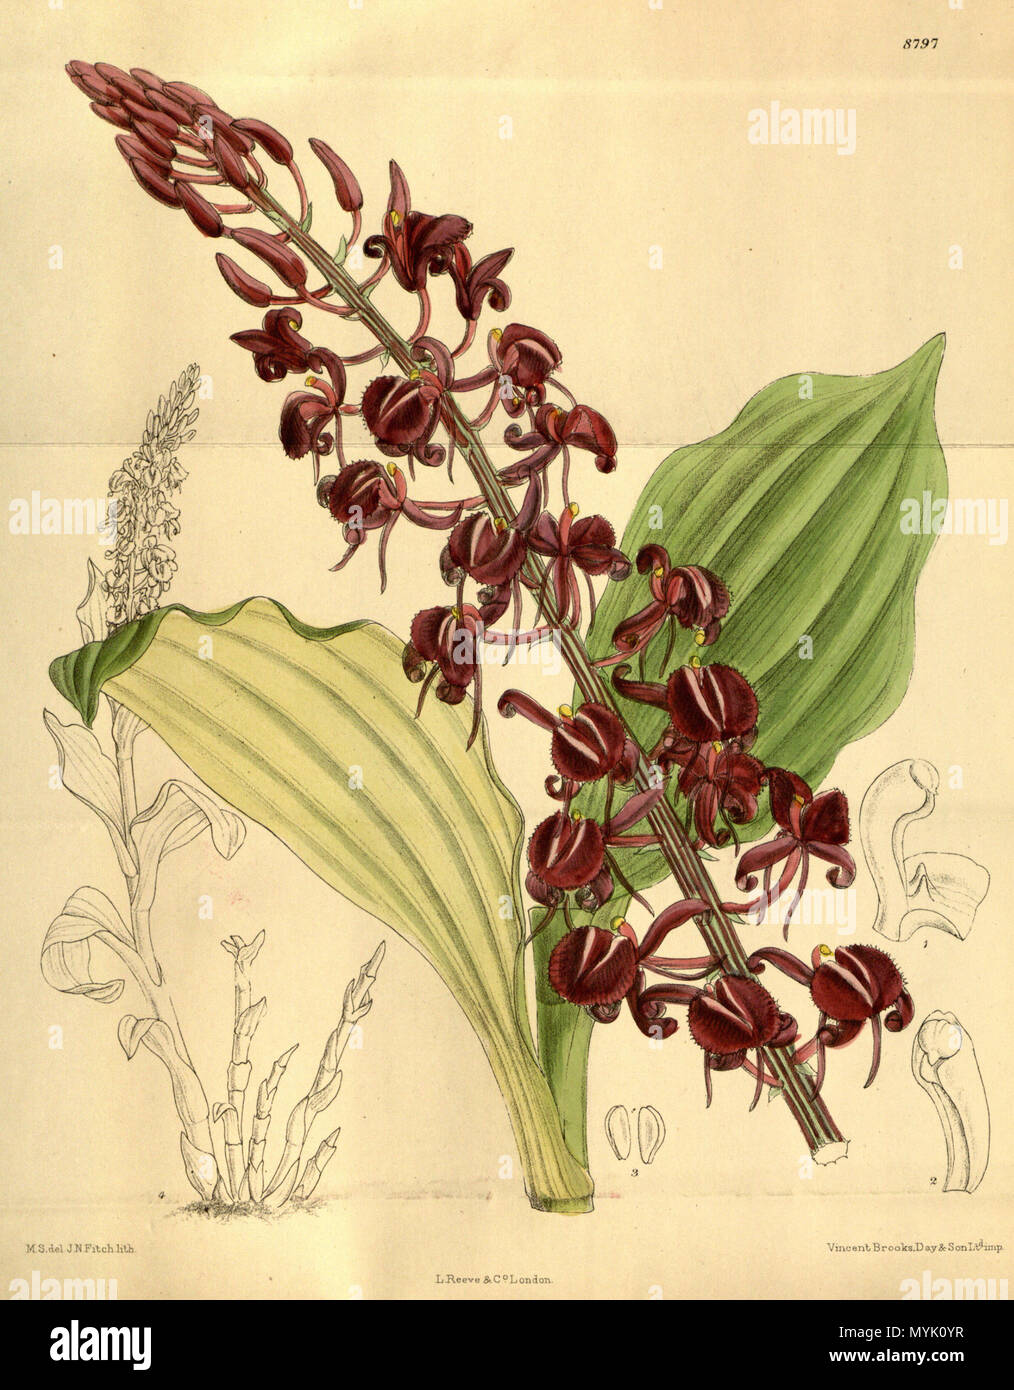 . Liparis macrantha (= Liparis gigantea), Orchidaceae . 1919. M.S. del., J.N.Fitch lith. 325 Liparis macrantha 145-8797 Stock Photo